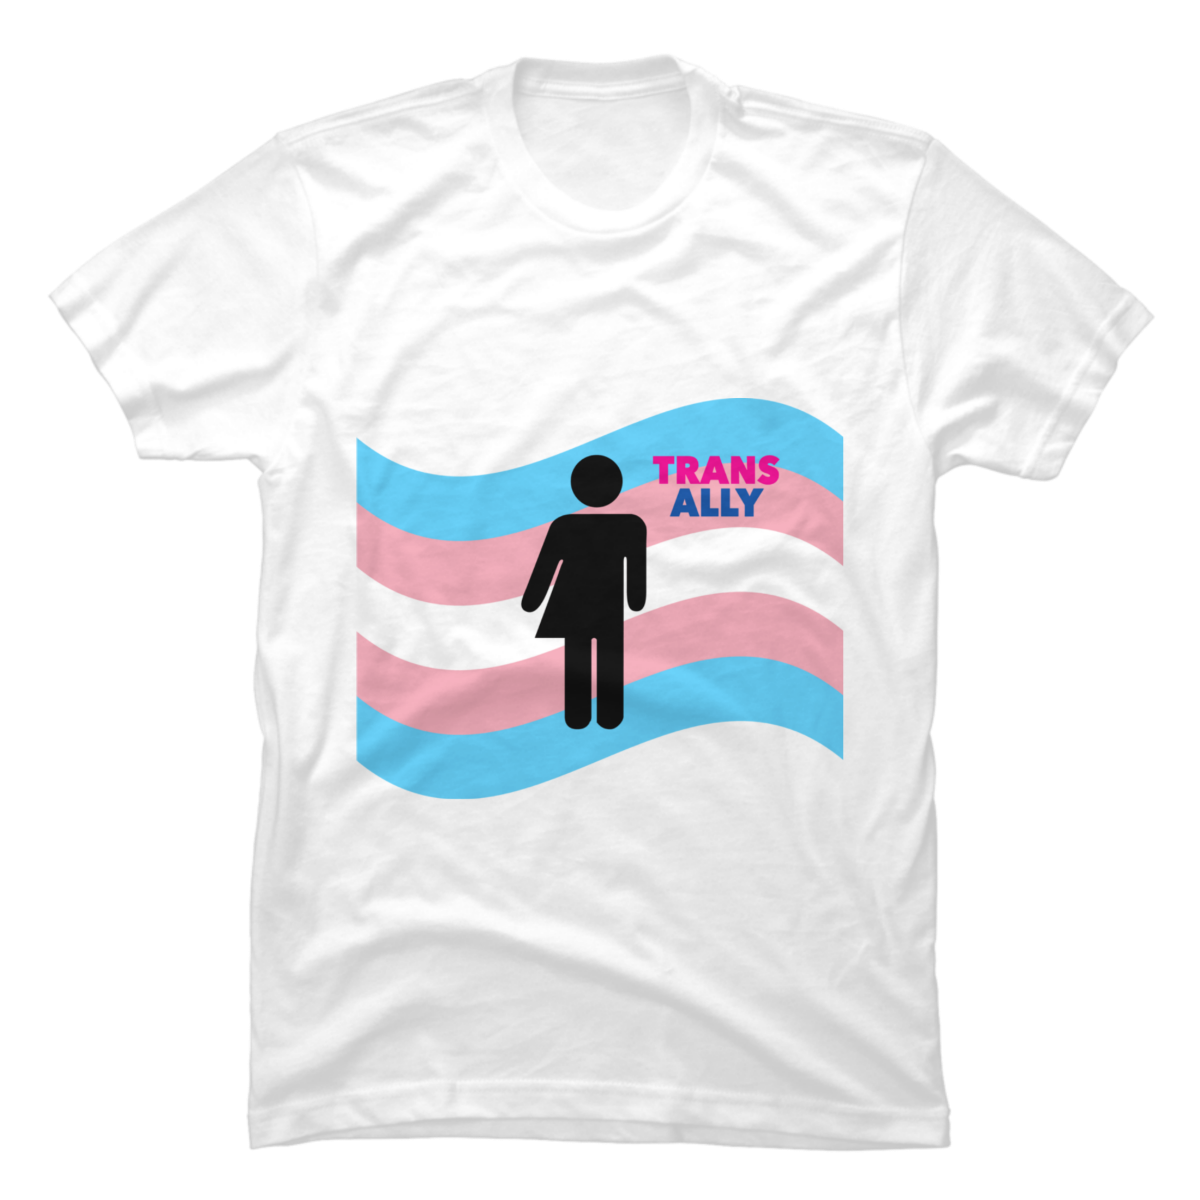 trans ally shirt